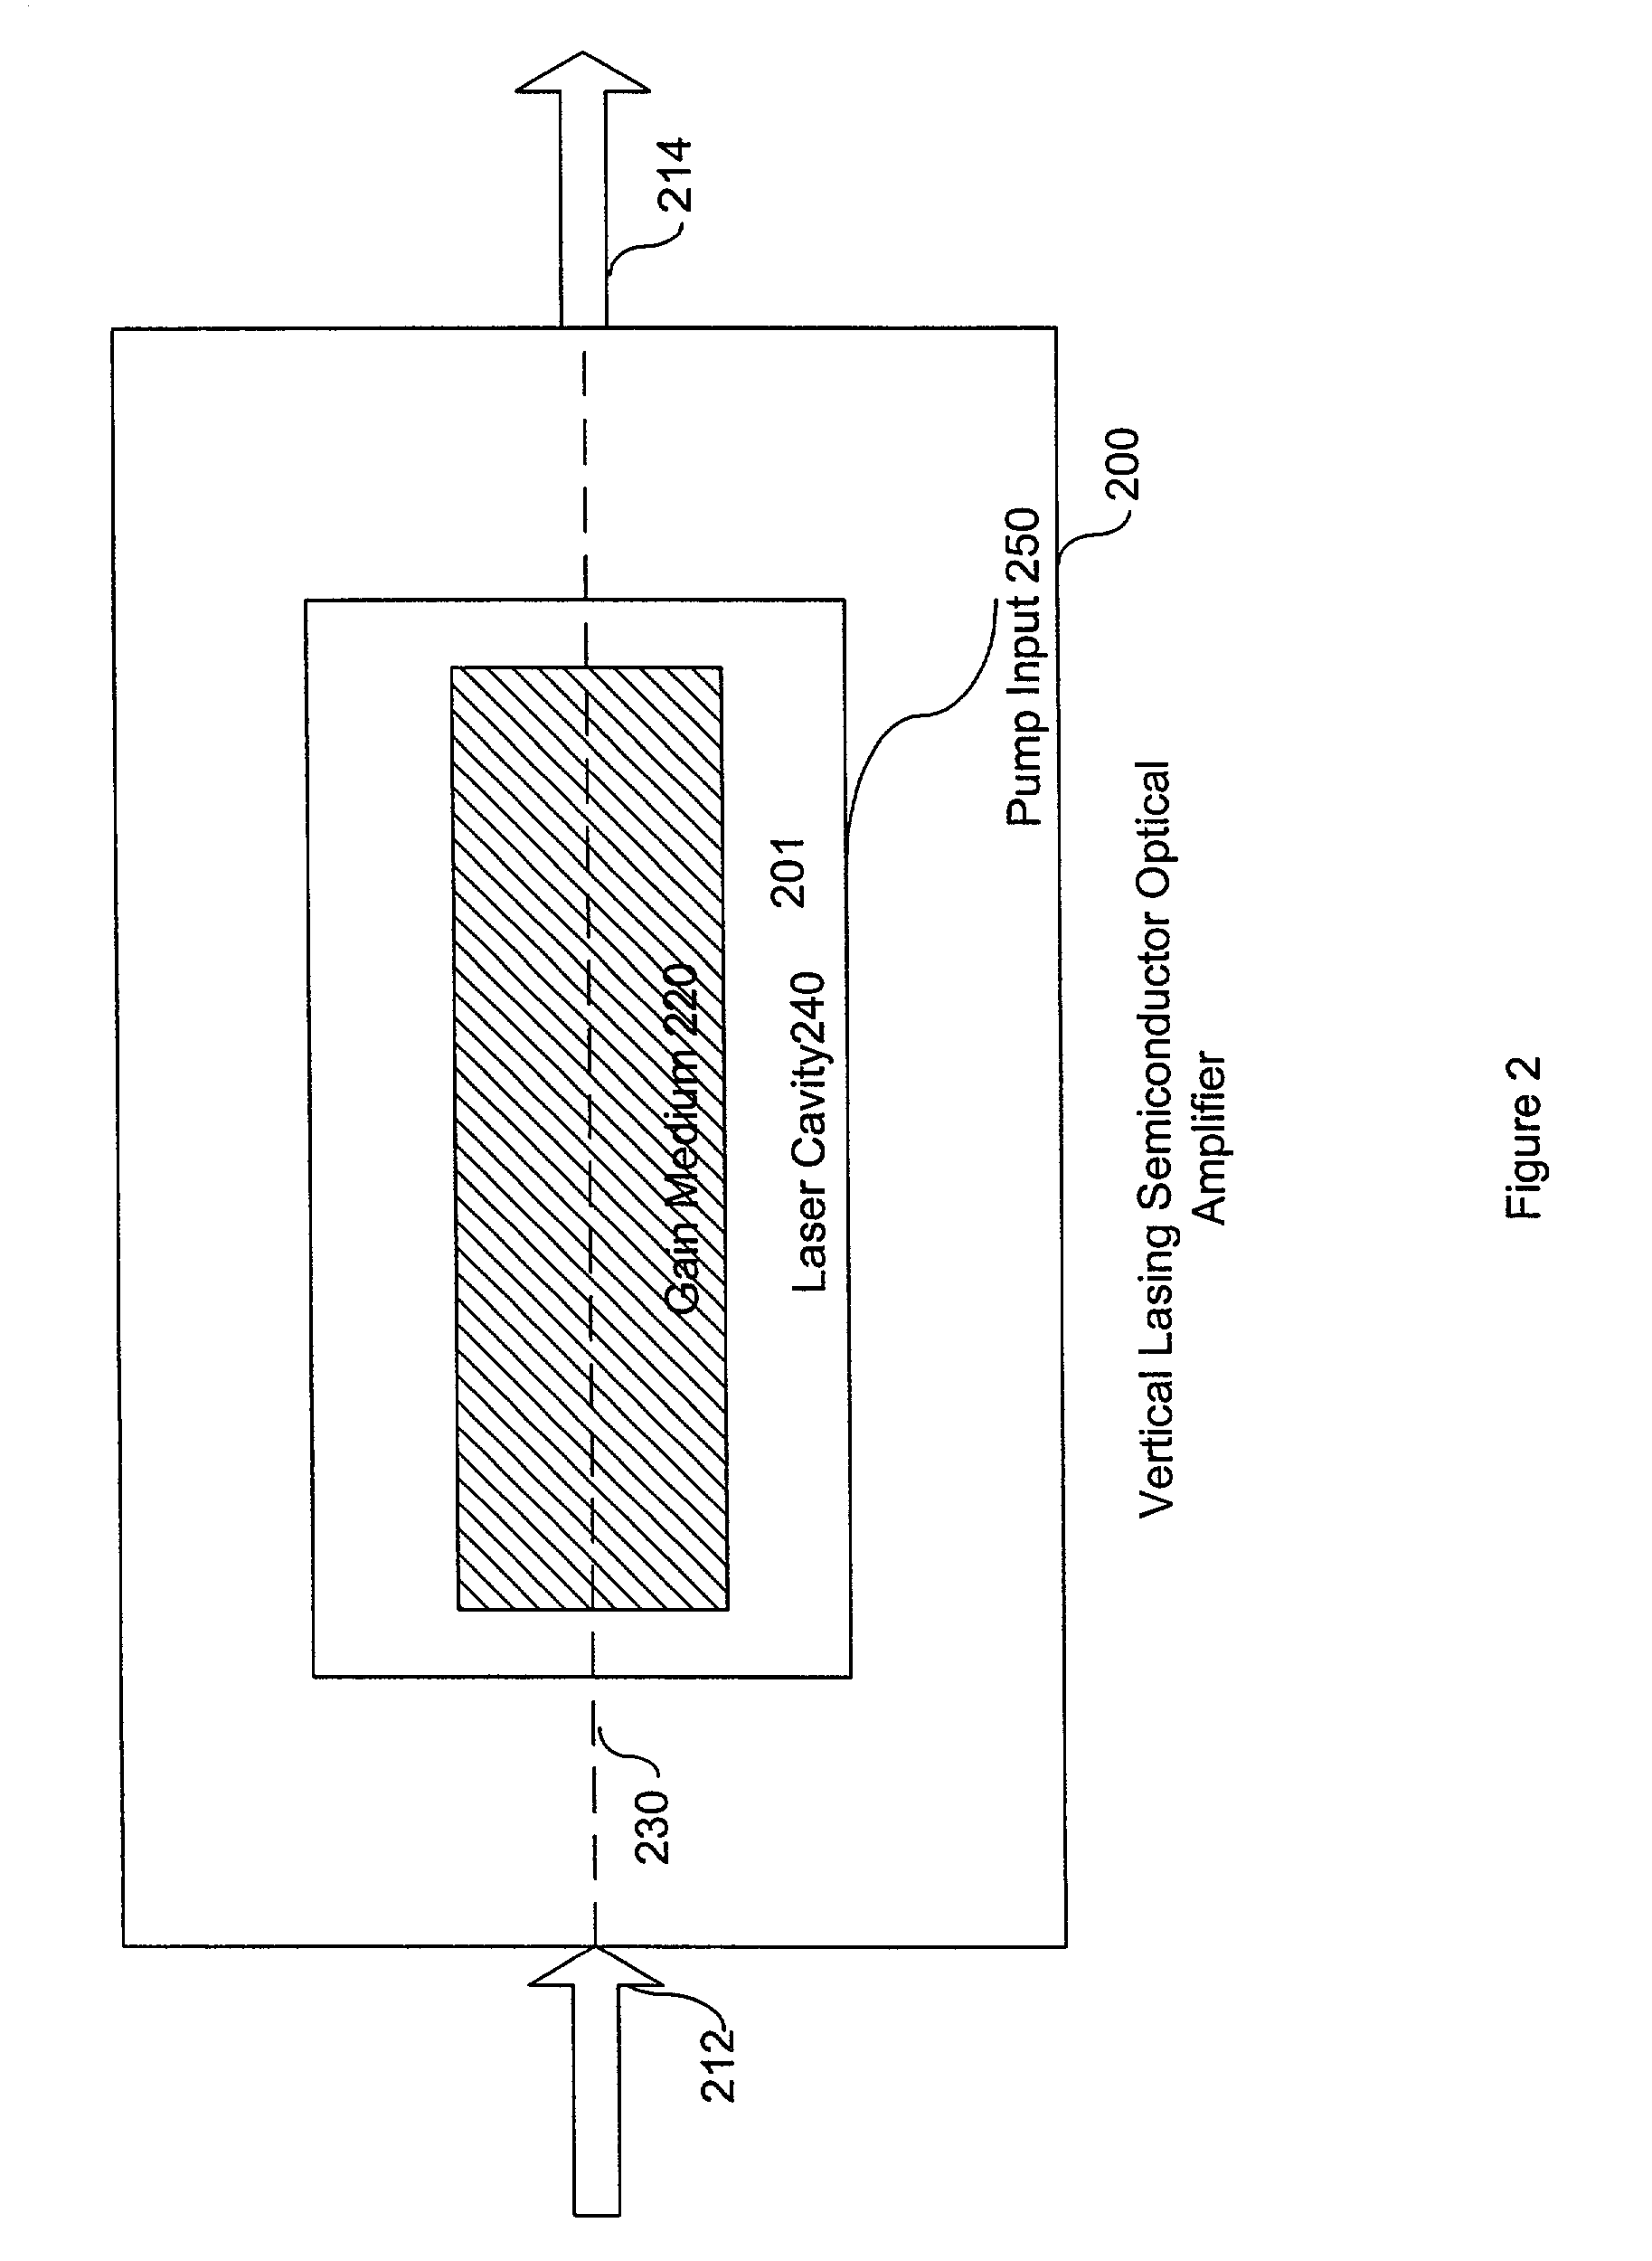 Optical crossbar using lasing semiconductor optical amplifiers